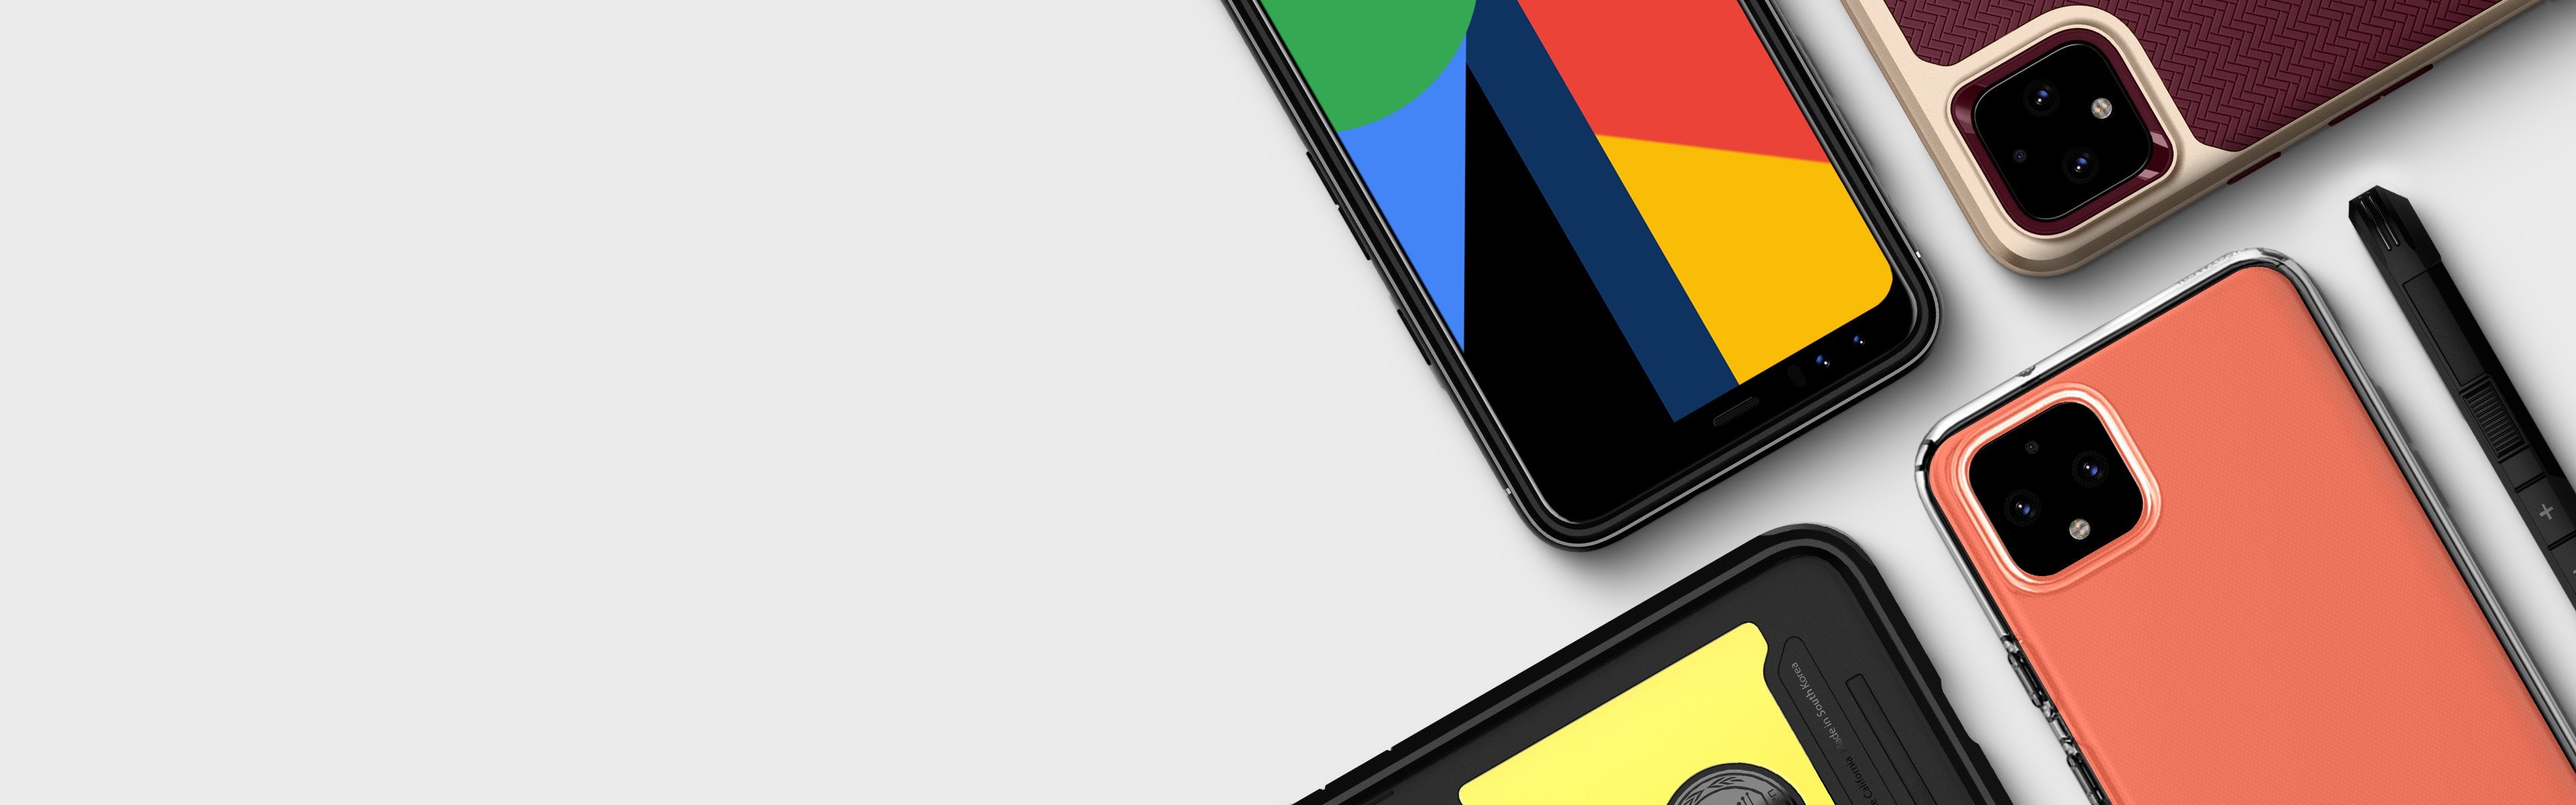 Spigen Cases for Google Pixel 4 / 4 XL